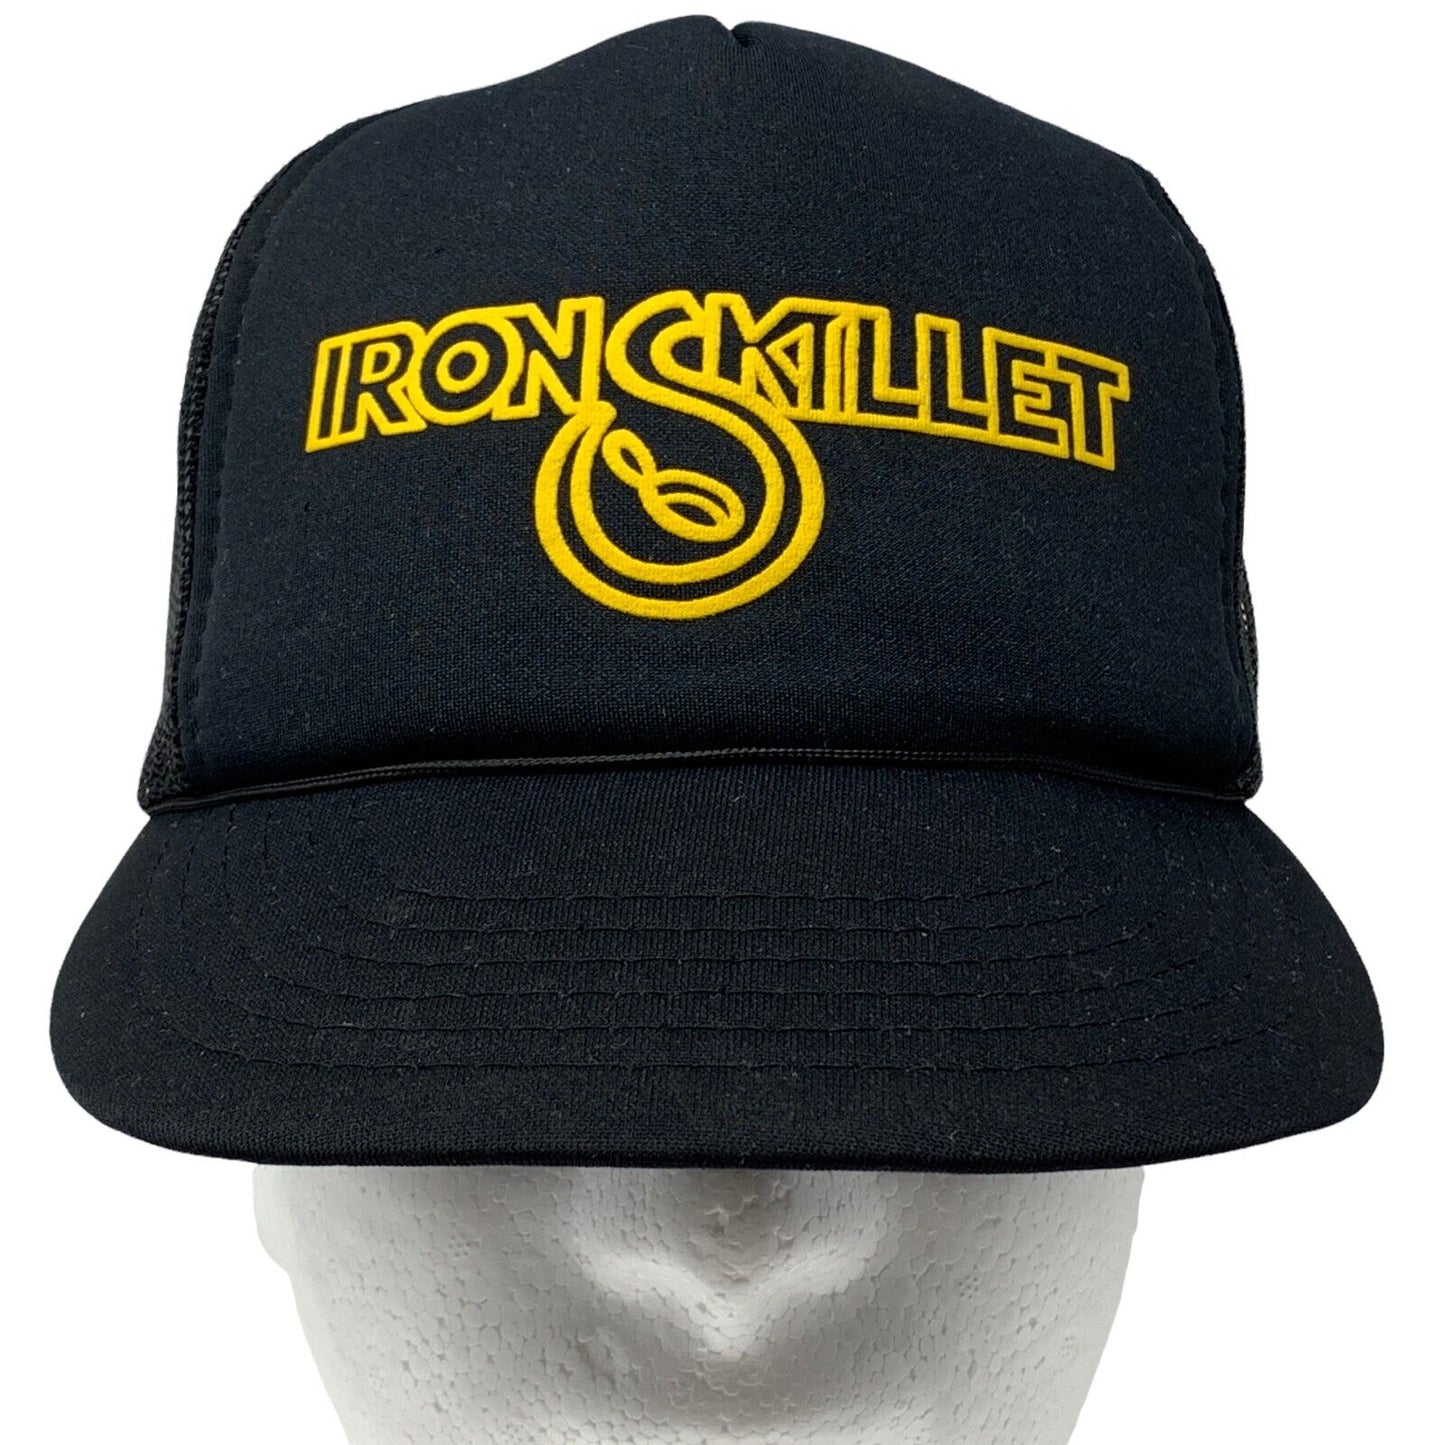 Iron Skillet Restaurant Snapback Trucker Hat Vintage 90s Truck Stop Mesh Cap